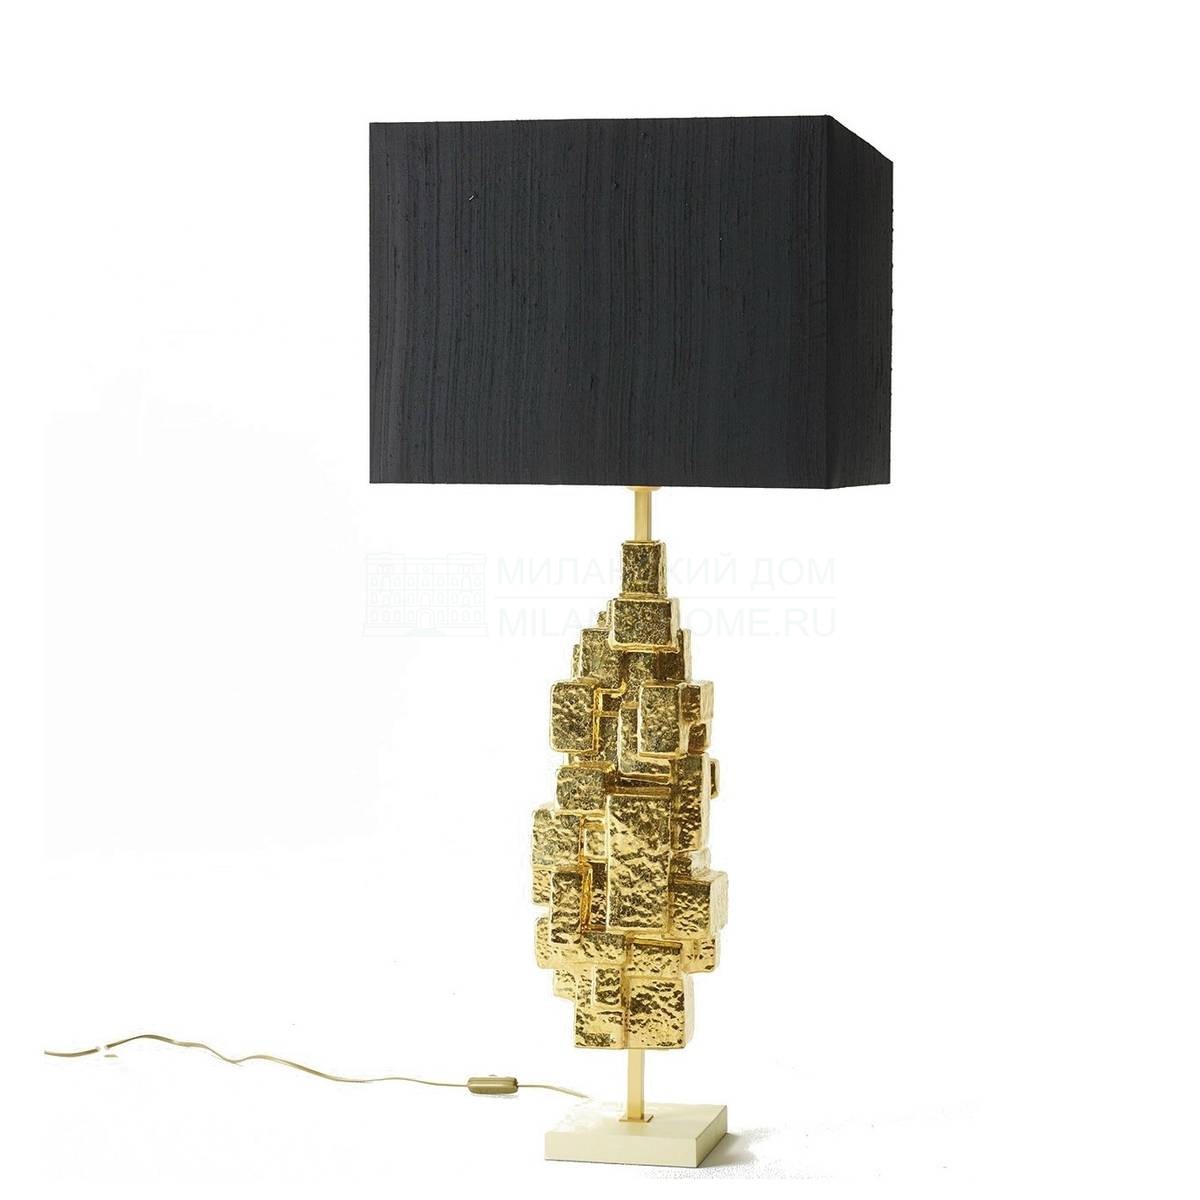 Настольная лампа Marvin table lamp из Италии фабрики MARIONI